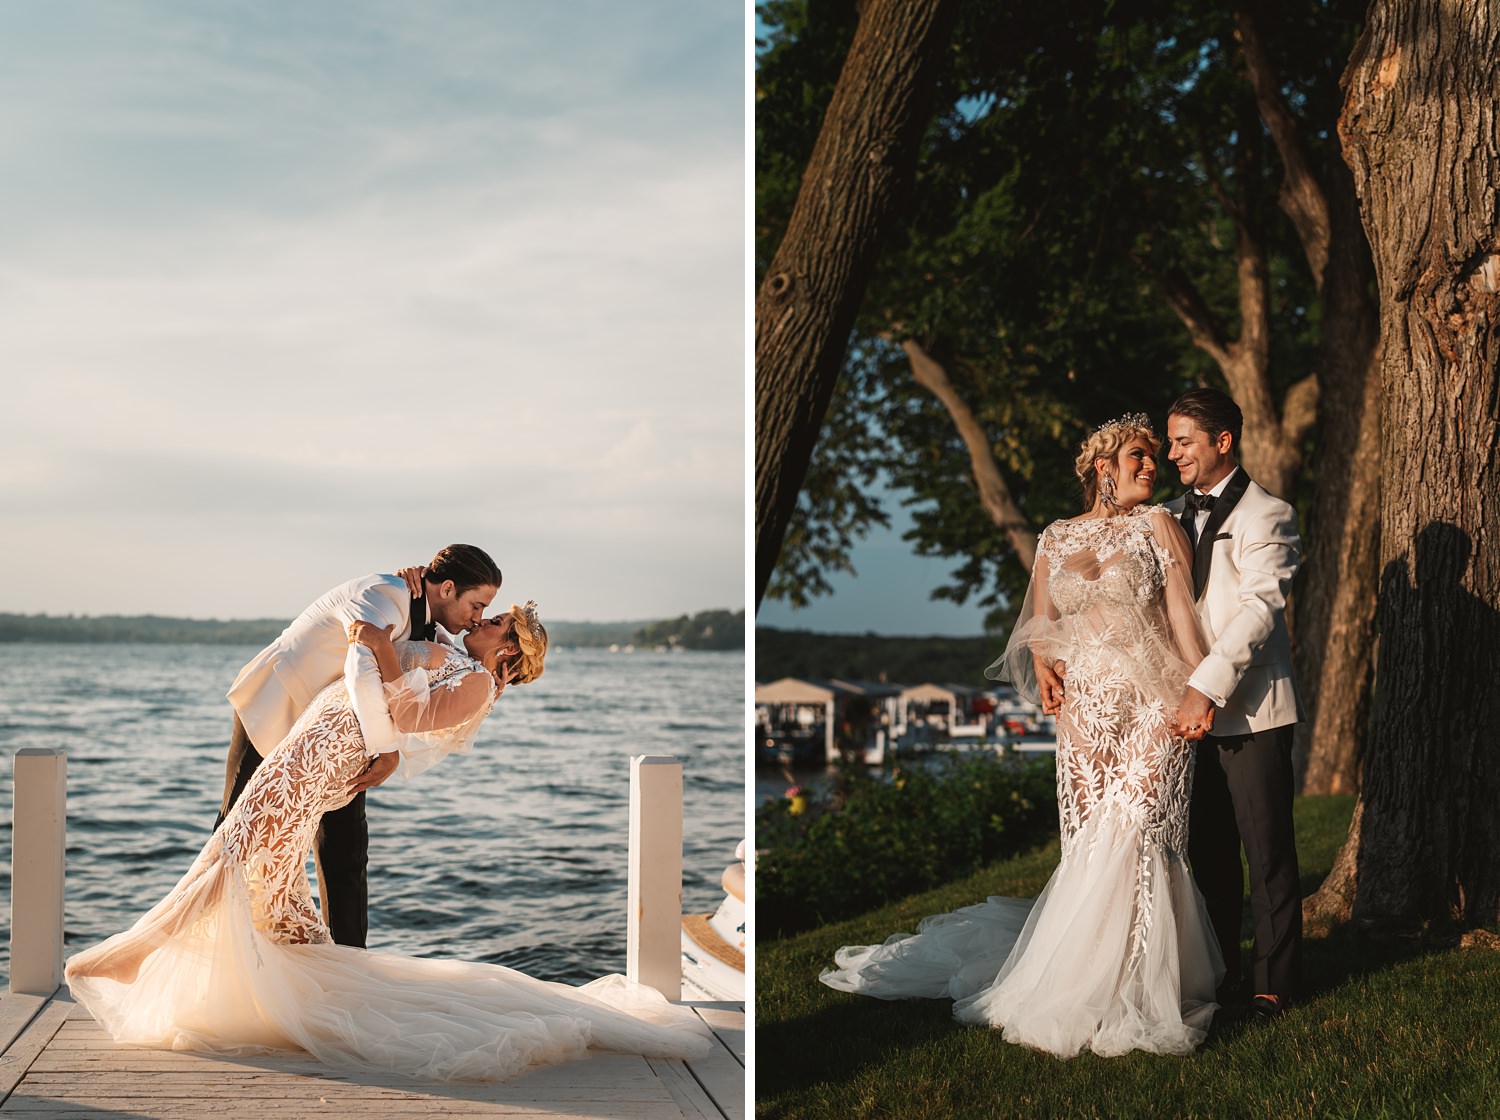 Lake Geneva Micro Wedding - The Adamkovi bride and groom epic photoshoot,